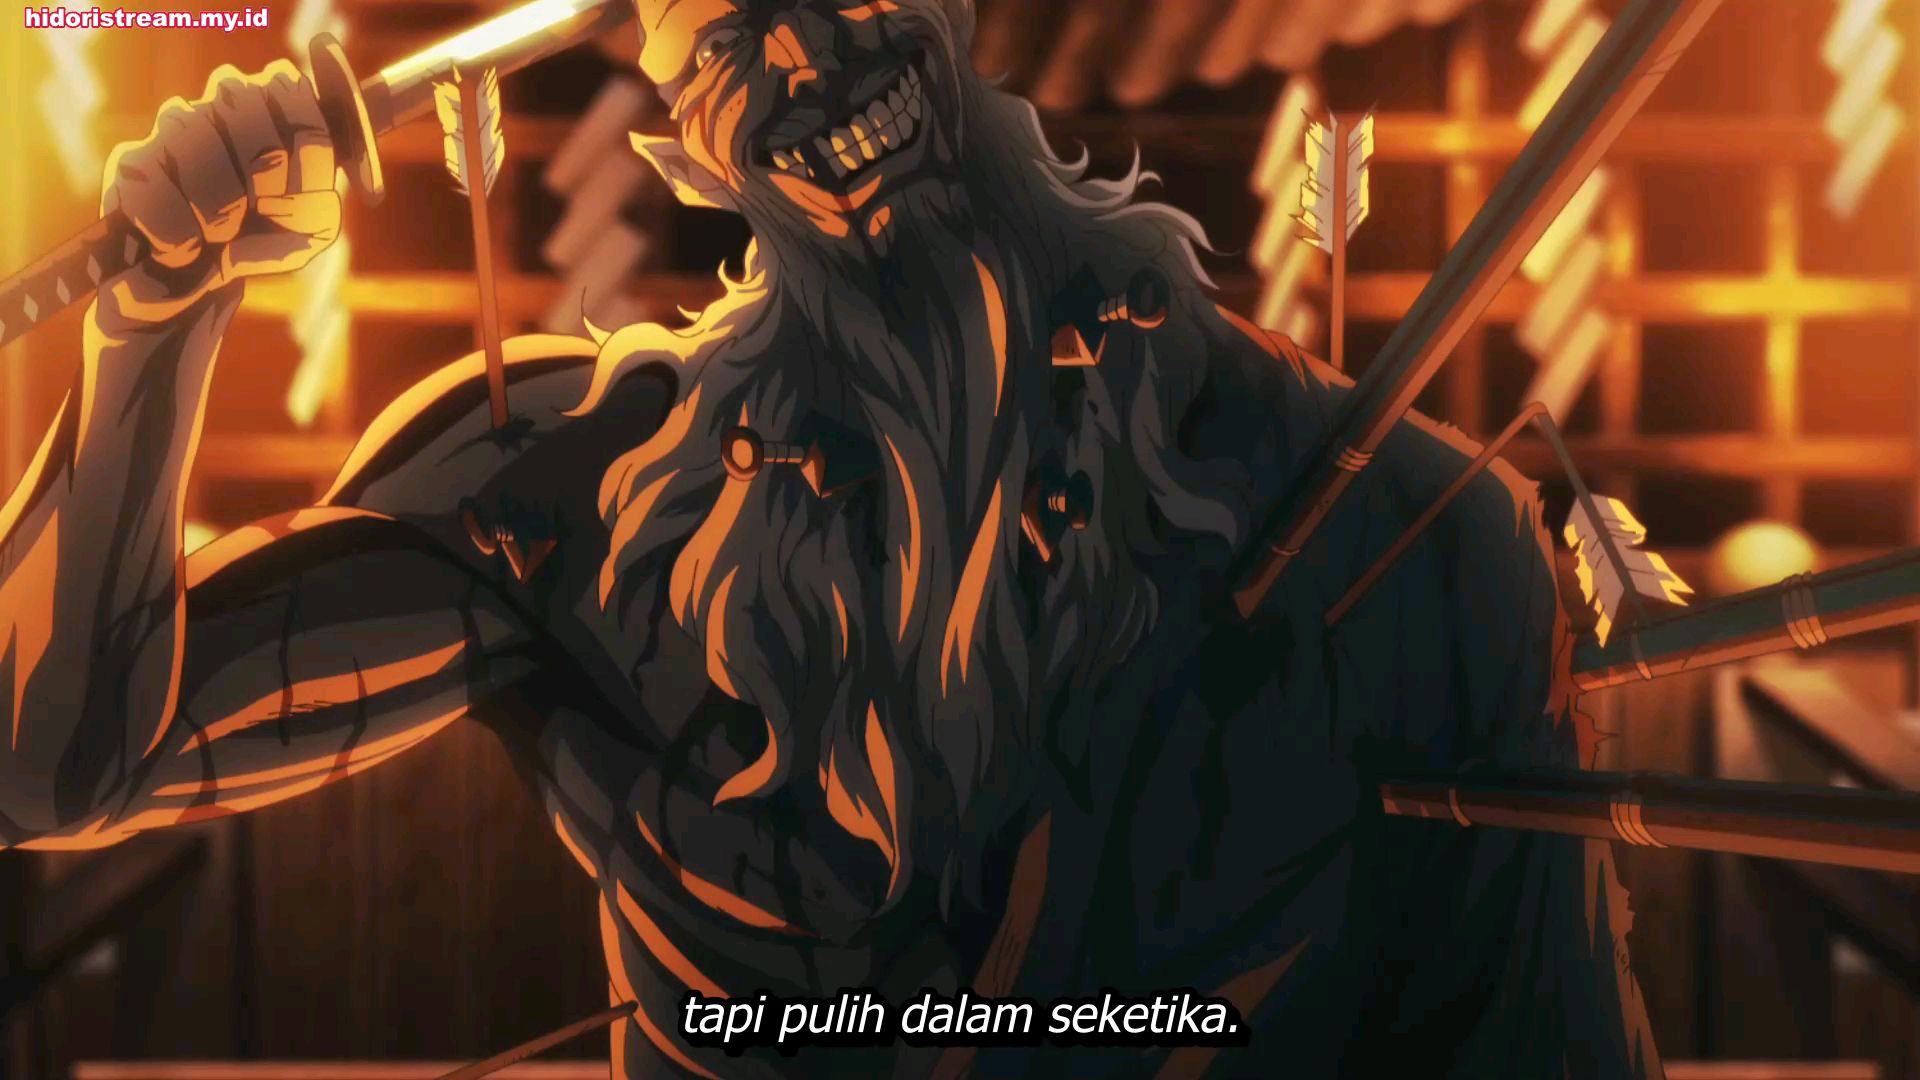 Nonton Jigokuraku Episode 3, Berikut Sinopsis dan Link Subtitle Indonesia